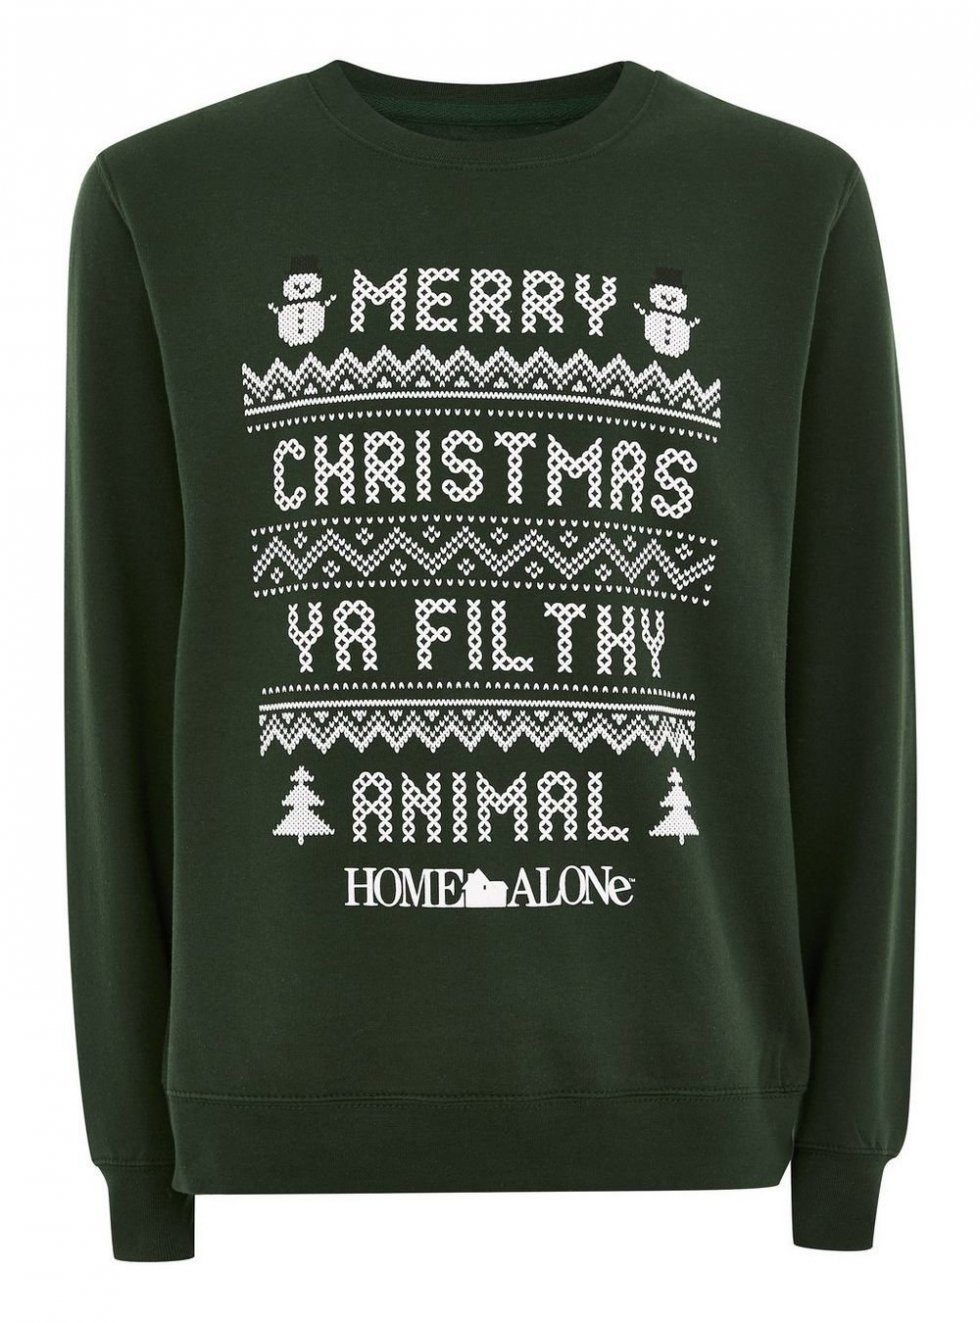 Topman - London co Dark Green Christmas Sweatshirt, 250 kroner.  - Klar til julefrokost: 25 (grimme) juletrøjer 